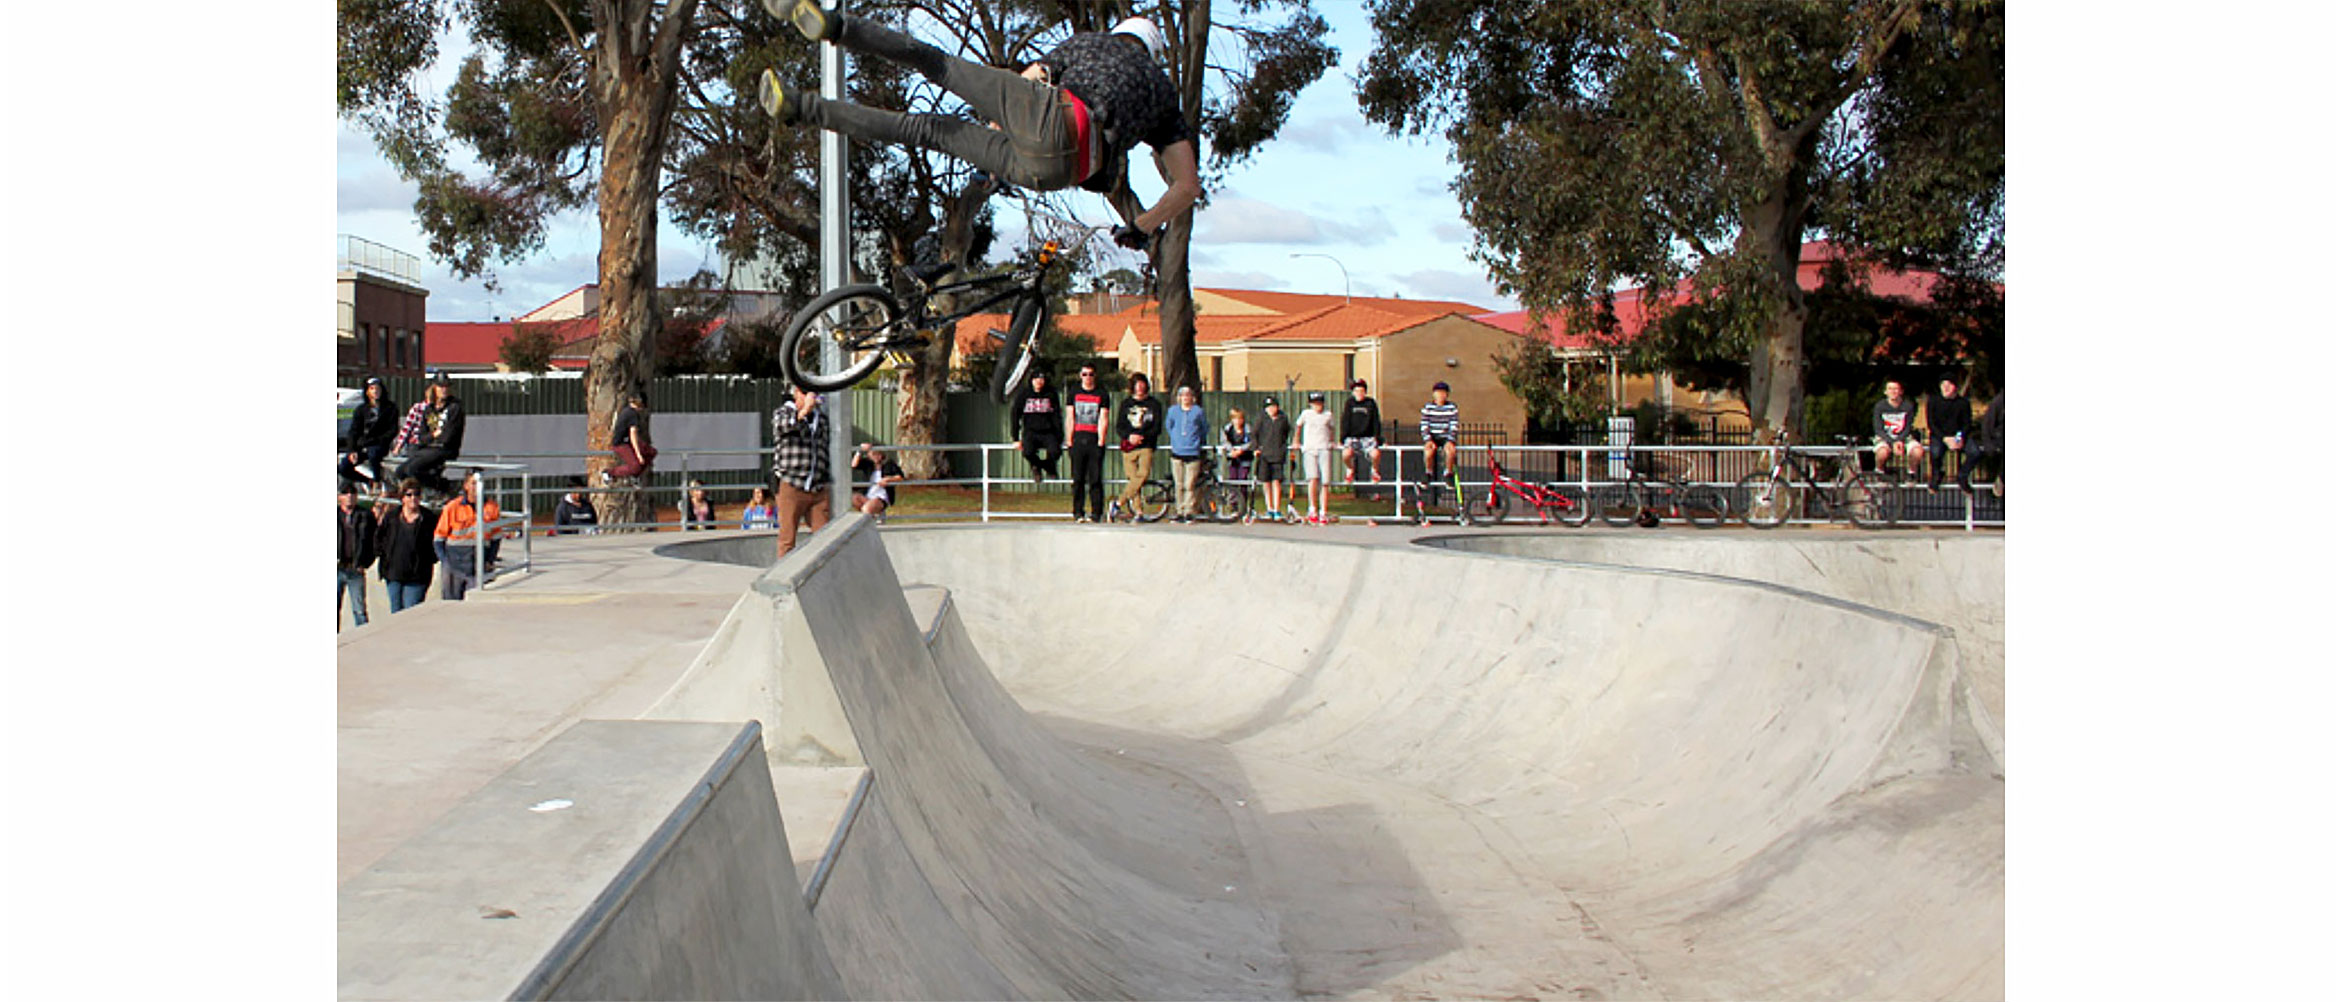 BMX tail whip at Kalgoorlie skate park Western Australia, Concrete Skateparks